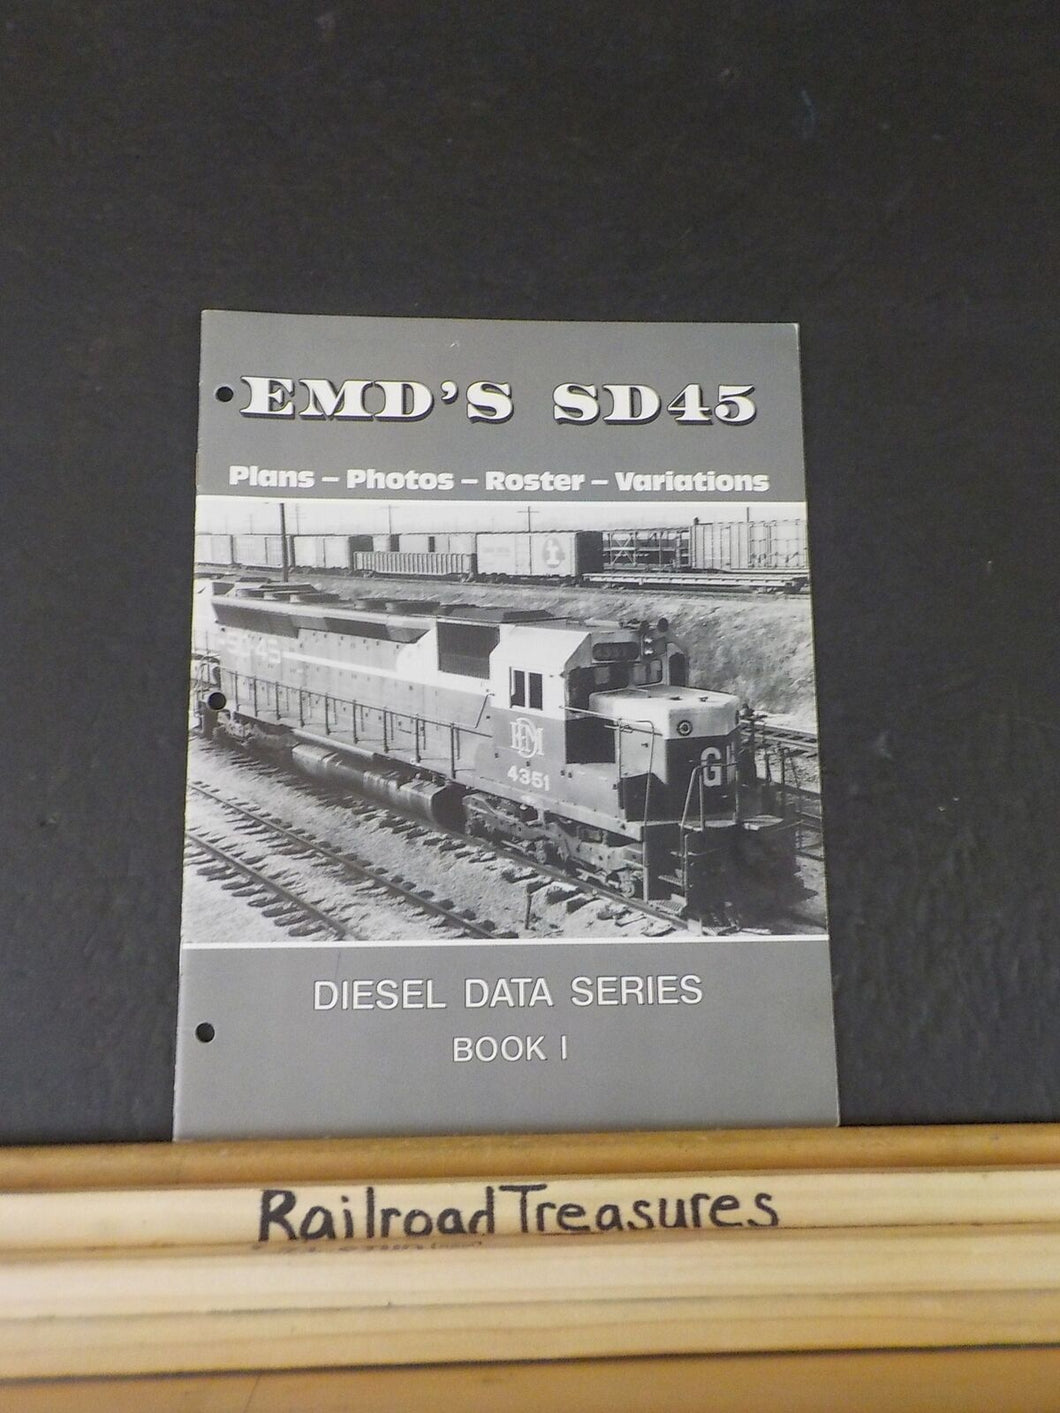 Diesel Data Series Book 1 EMD's SD45 plans photos roster variations